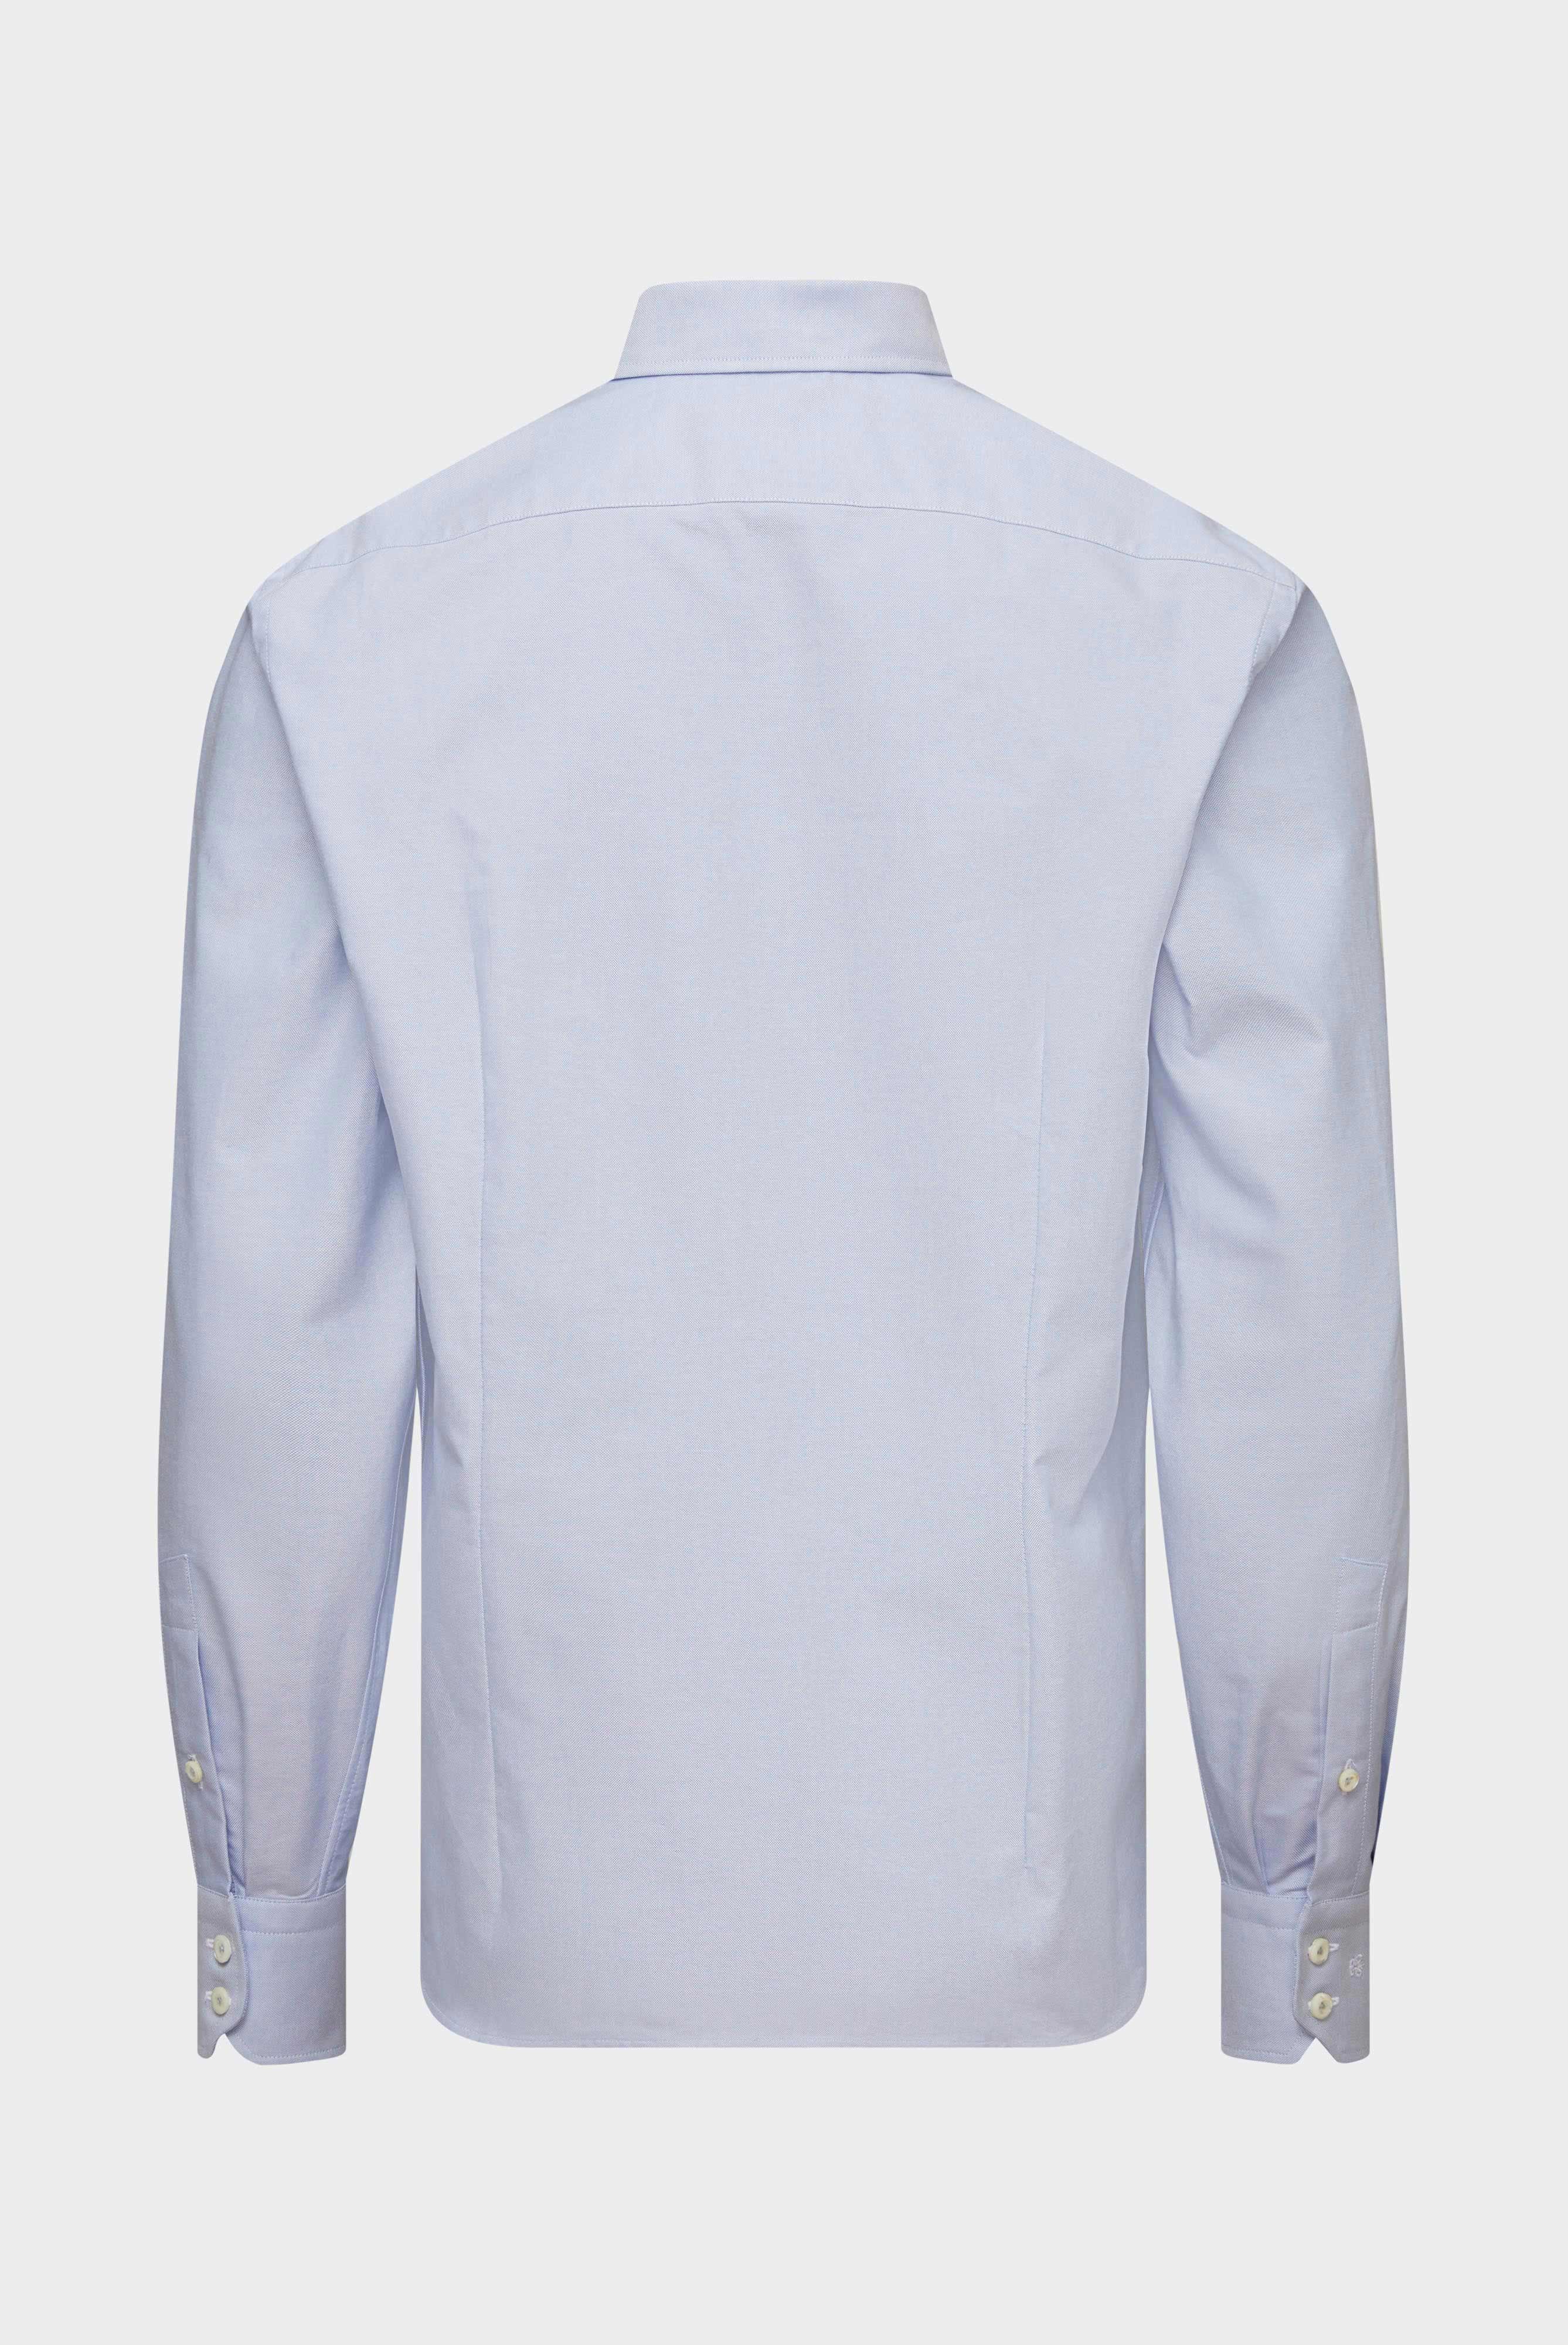 Casual Shirts+Oxford Shirt Tailor Fit+20.2013.AV.161267.730.37